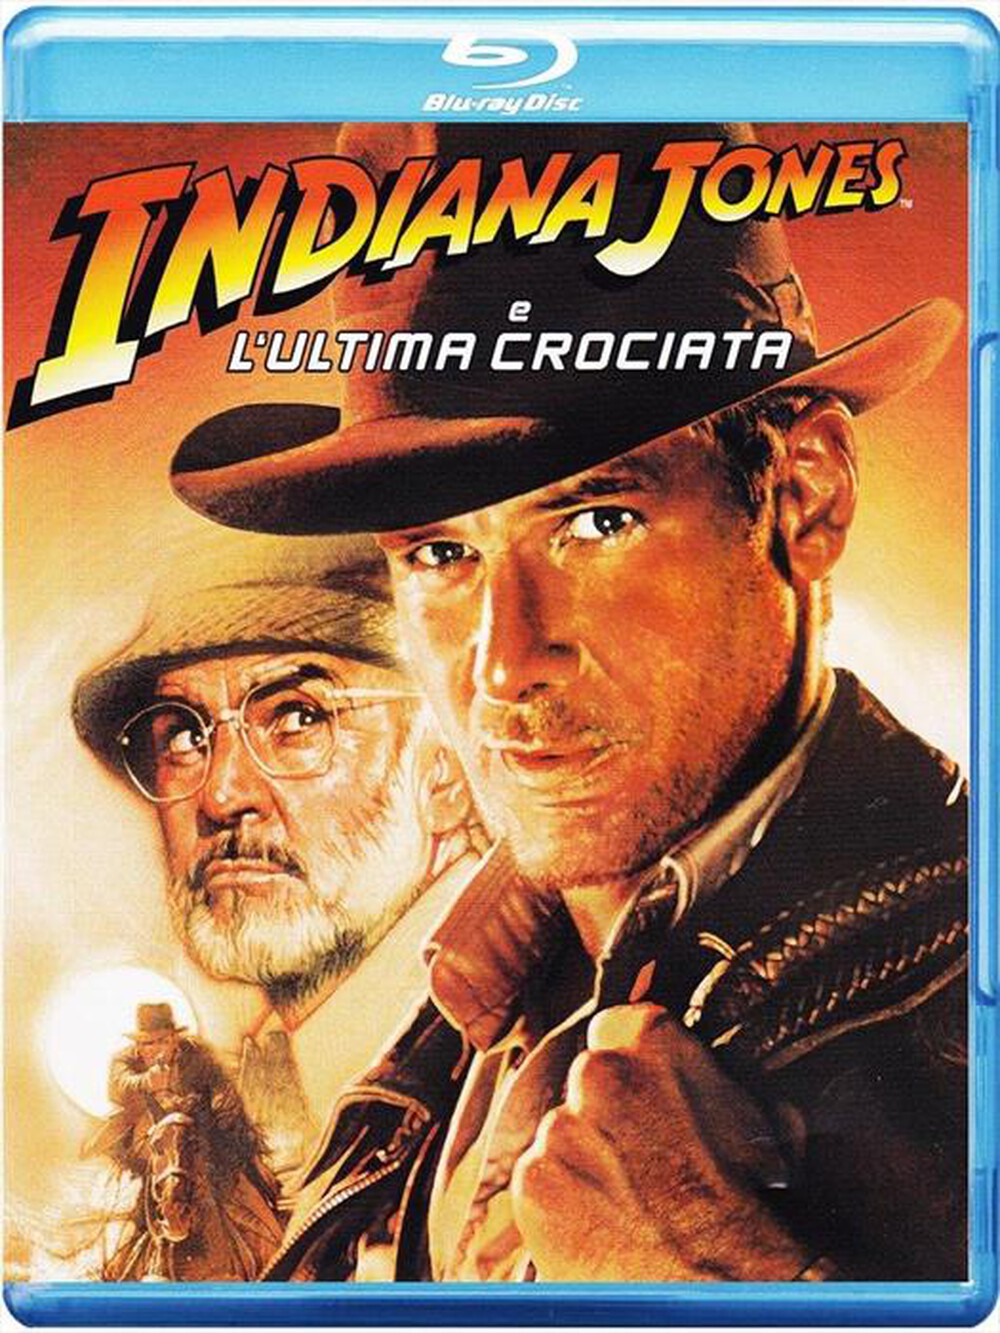 "UNIVERSAL PICTURES - Indiana Jones E L'Ultima Crociata"